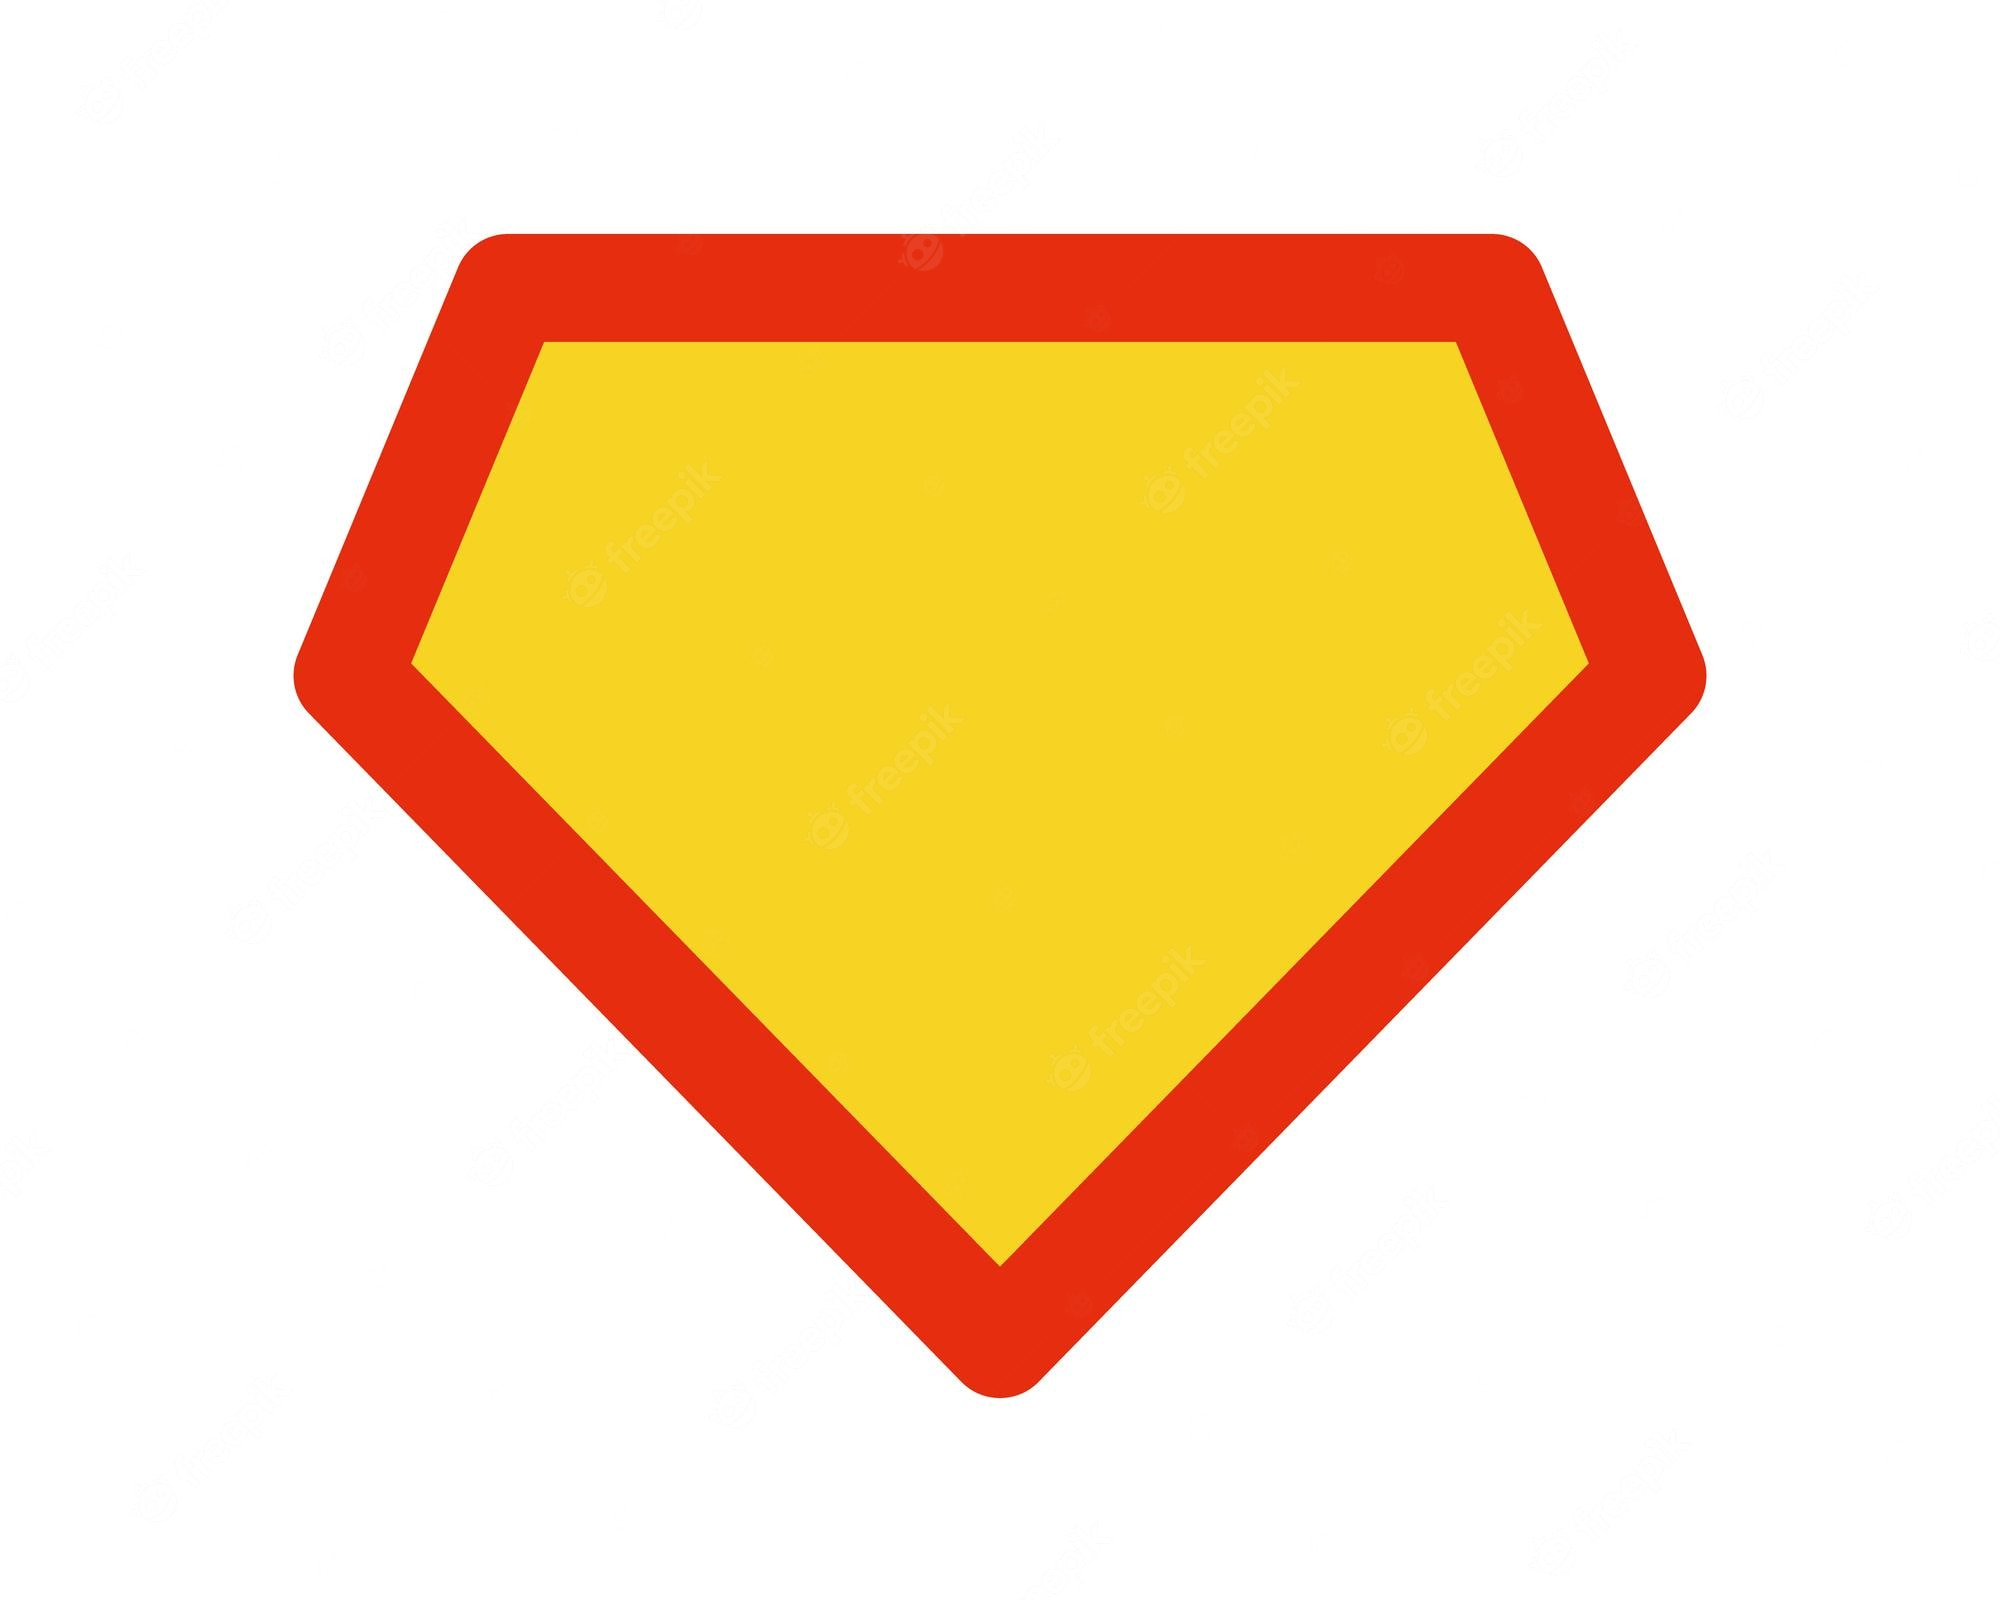 Superman symbol Images  Free Vectors, Stock Photos & PSD Throughout Blank Superman Logo Template